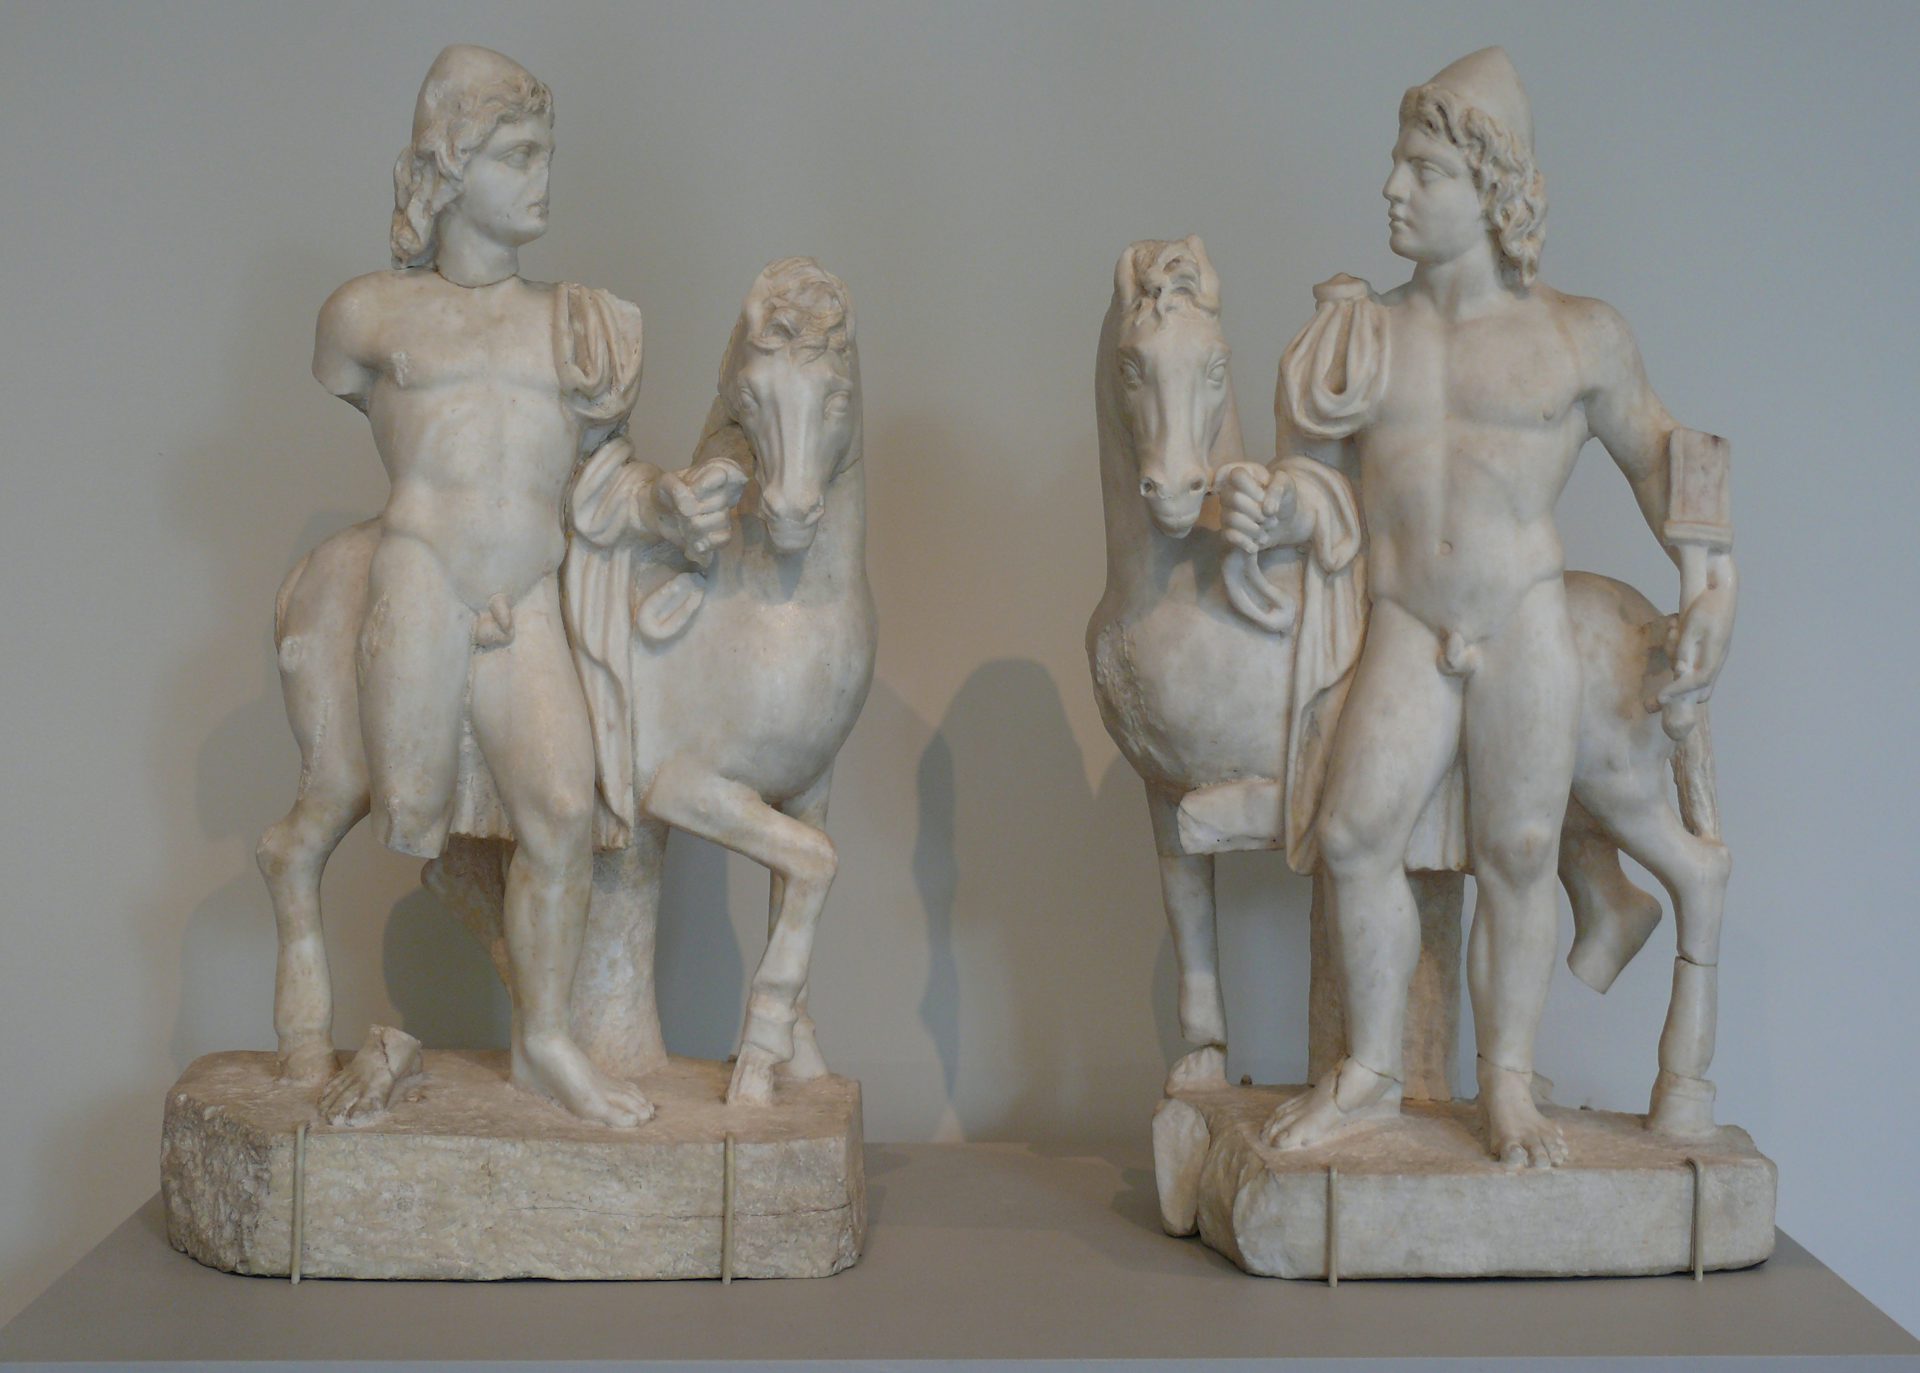 Roman statuettes of Castor and Pollux